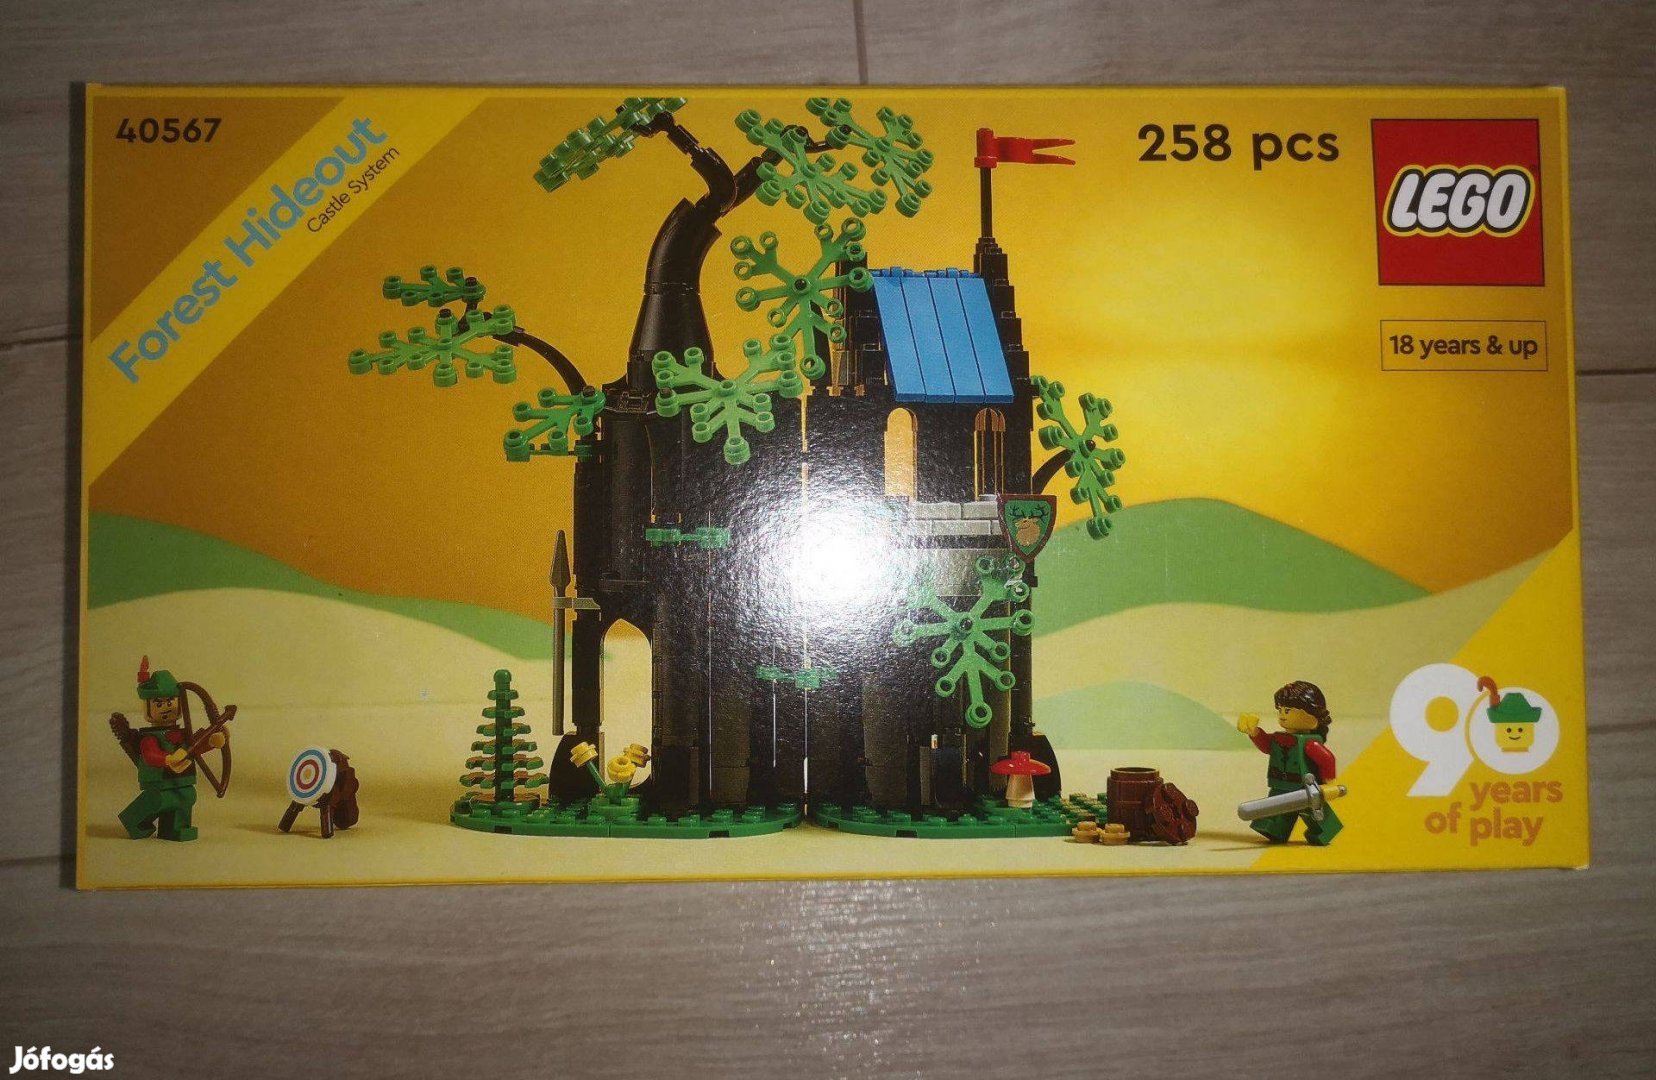 LEGO Erdei búvóhely (40567)